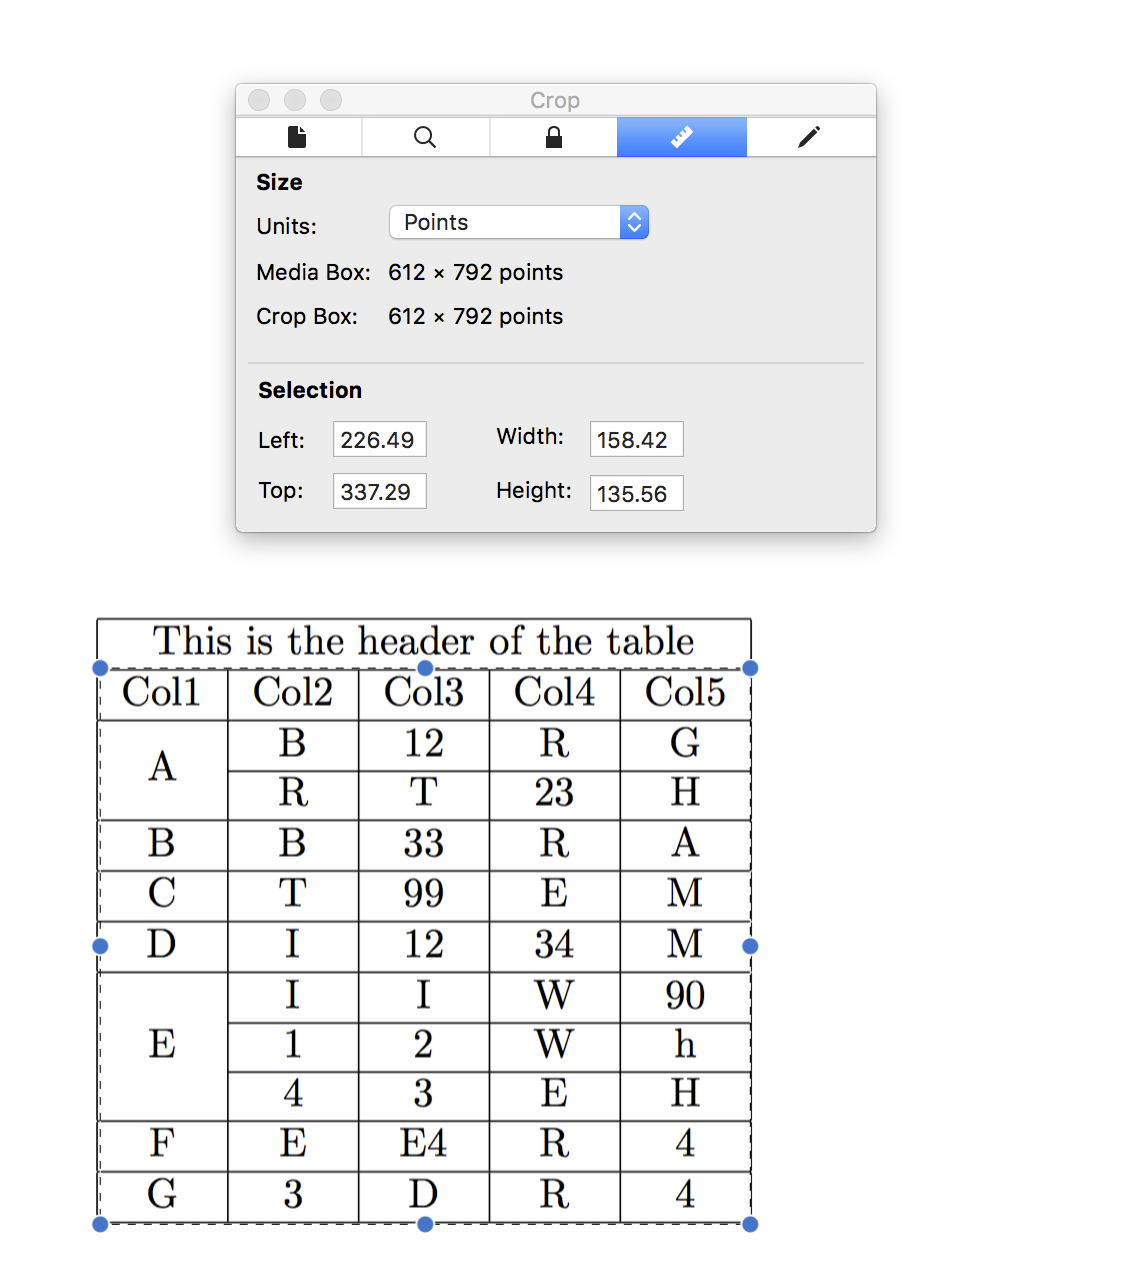 قص الجداول في ملفات PDF واستخرجها باستخدام Tabula